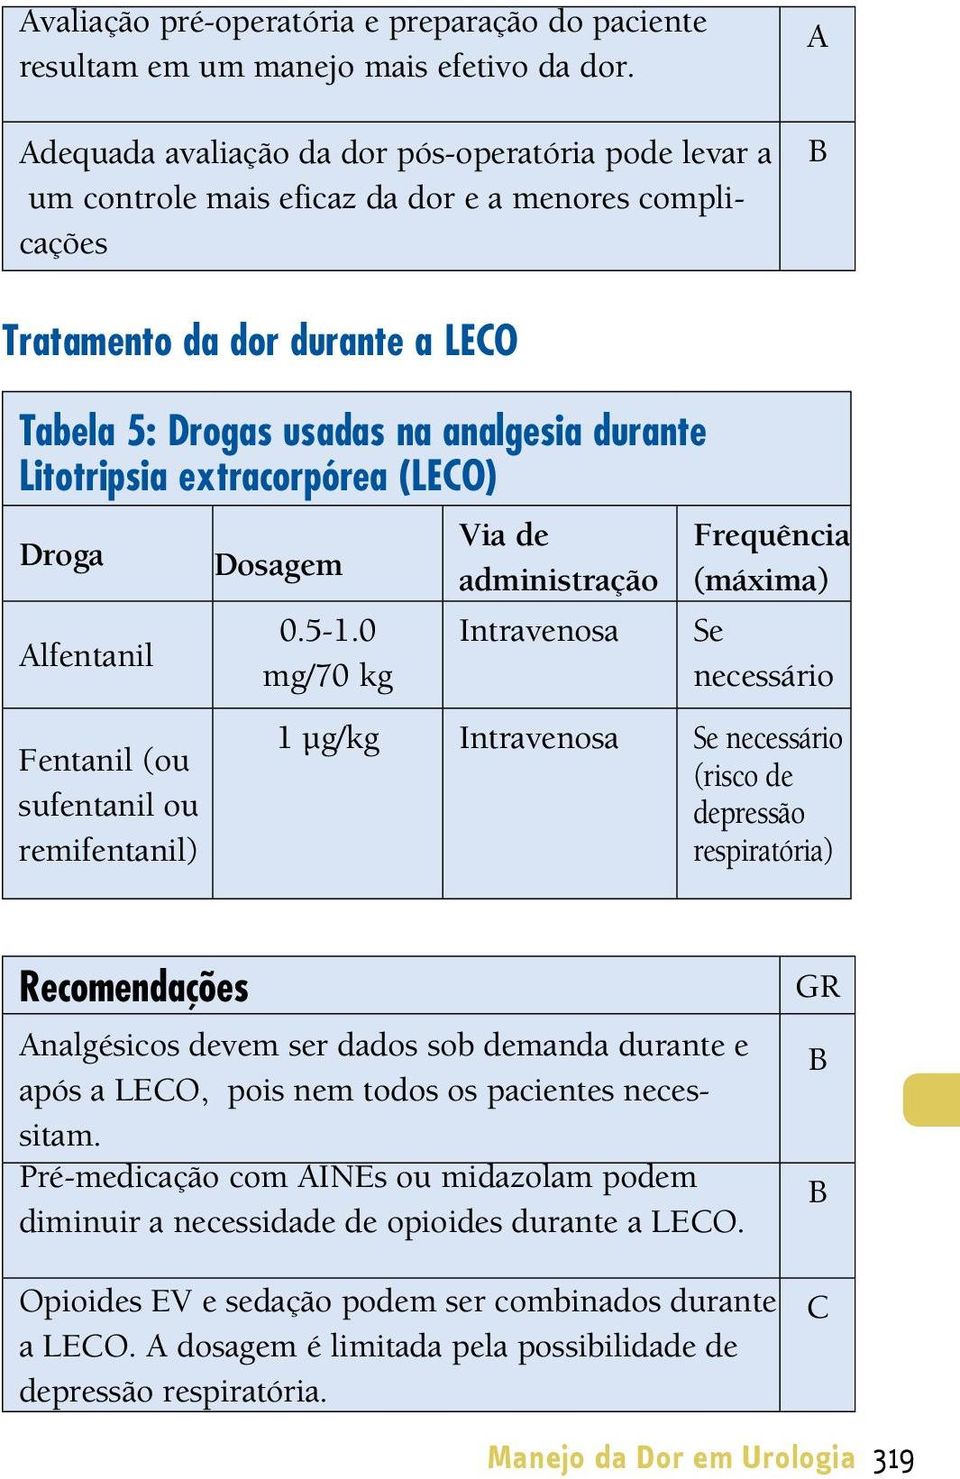 extracorpórea (LECO) Droga lfentanil Fentanil (ou sufentanil ou remifentanil) Dosagem 0.5-1.